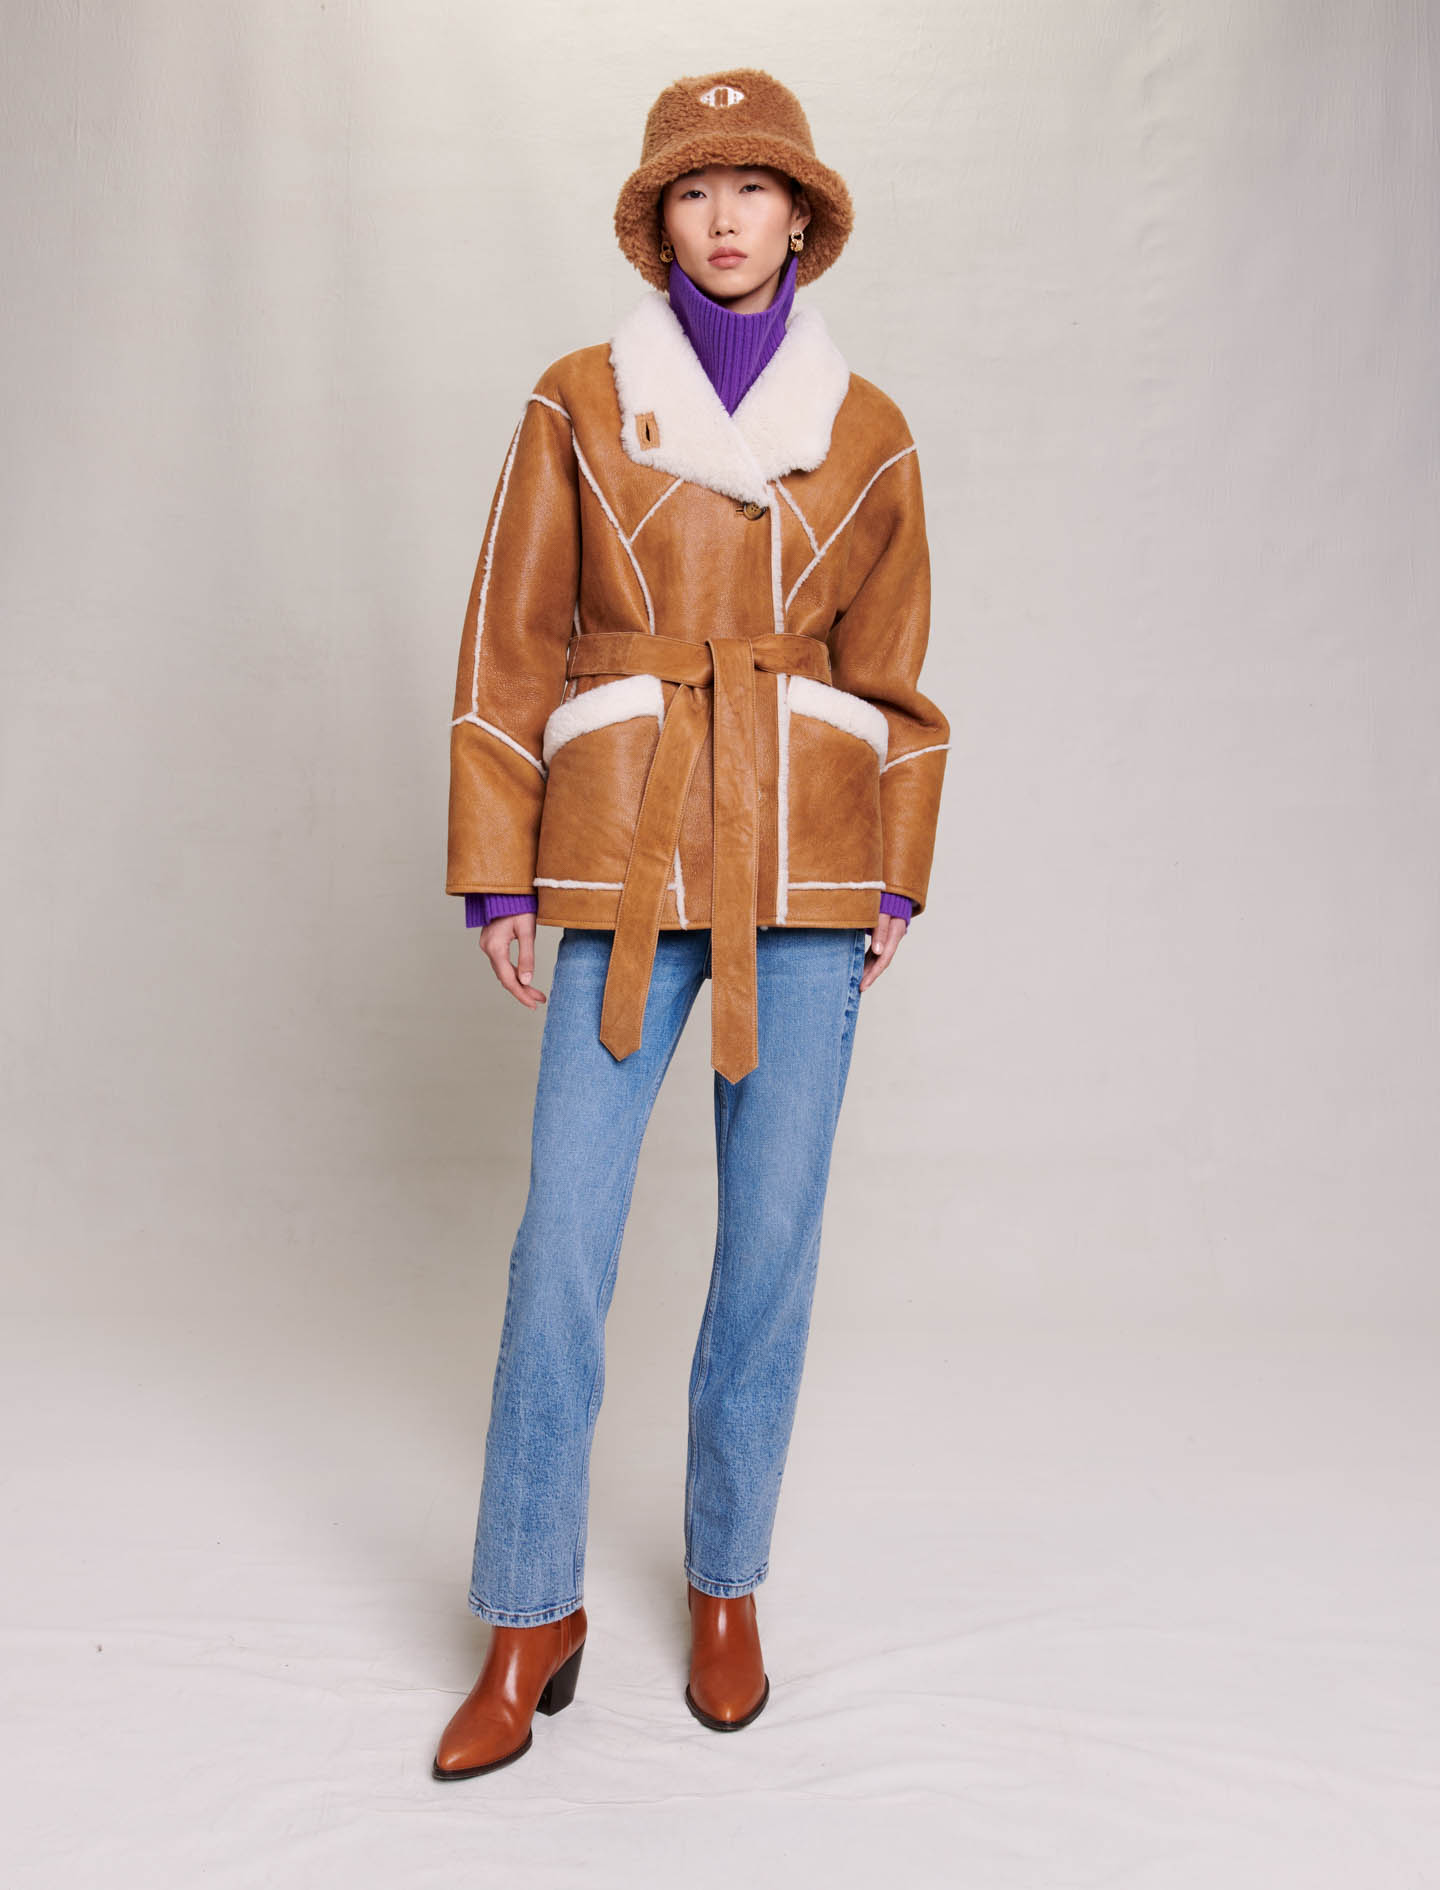 Maje Woman's lamb Short fleece coat for Fall/Winter, in color Camel / Brown